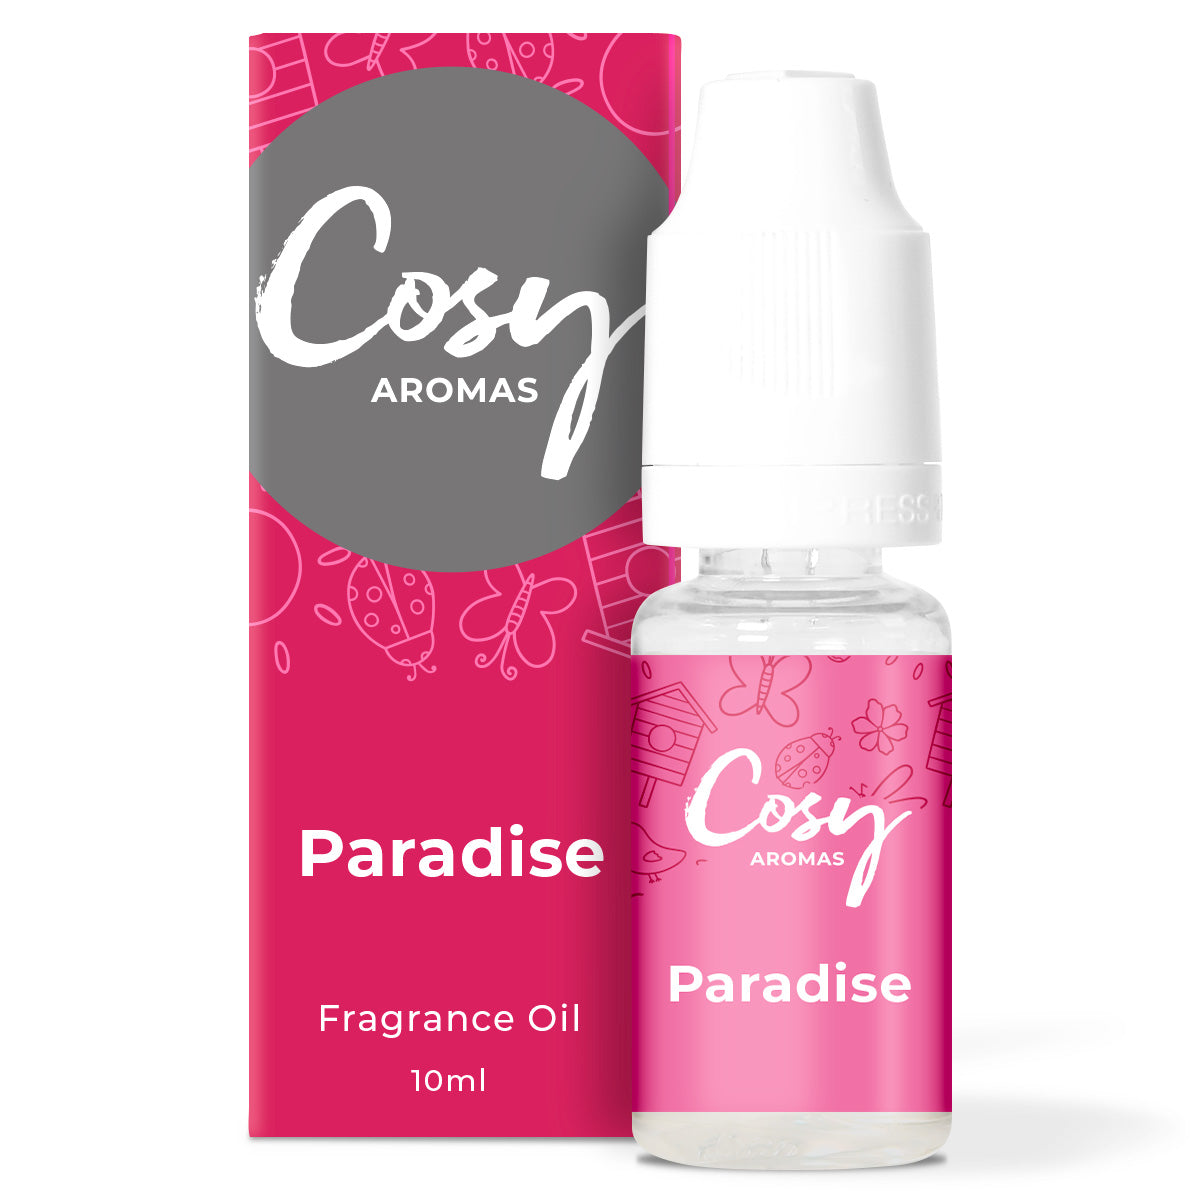 Paradise Fragrance Oil